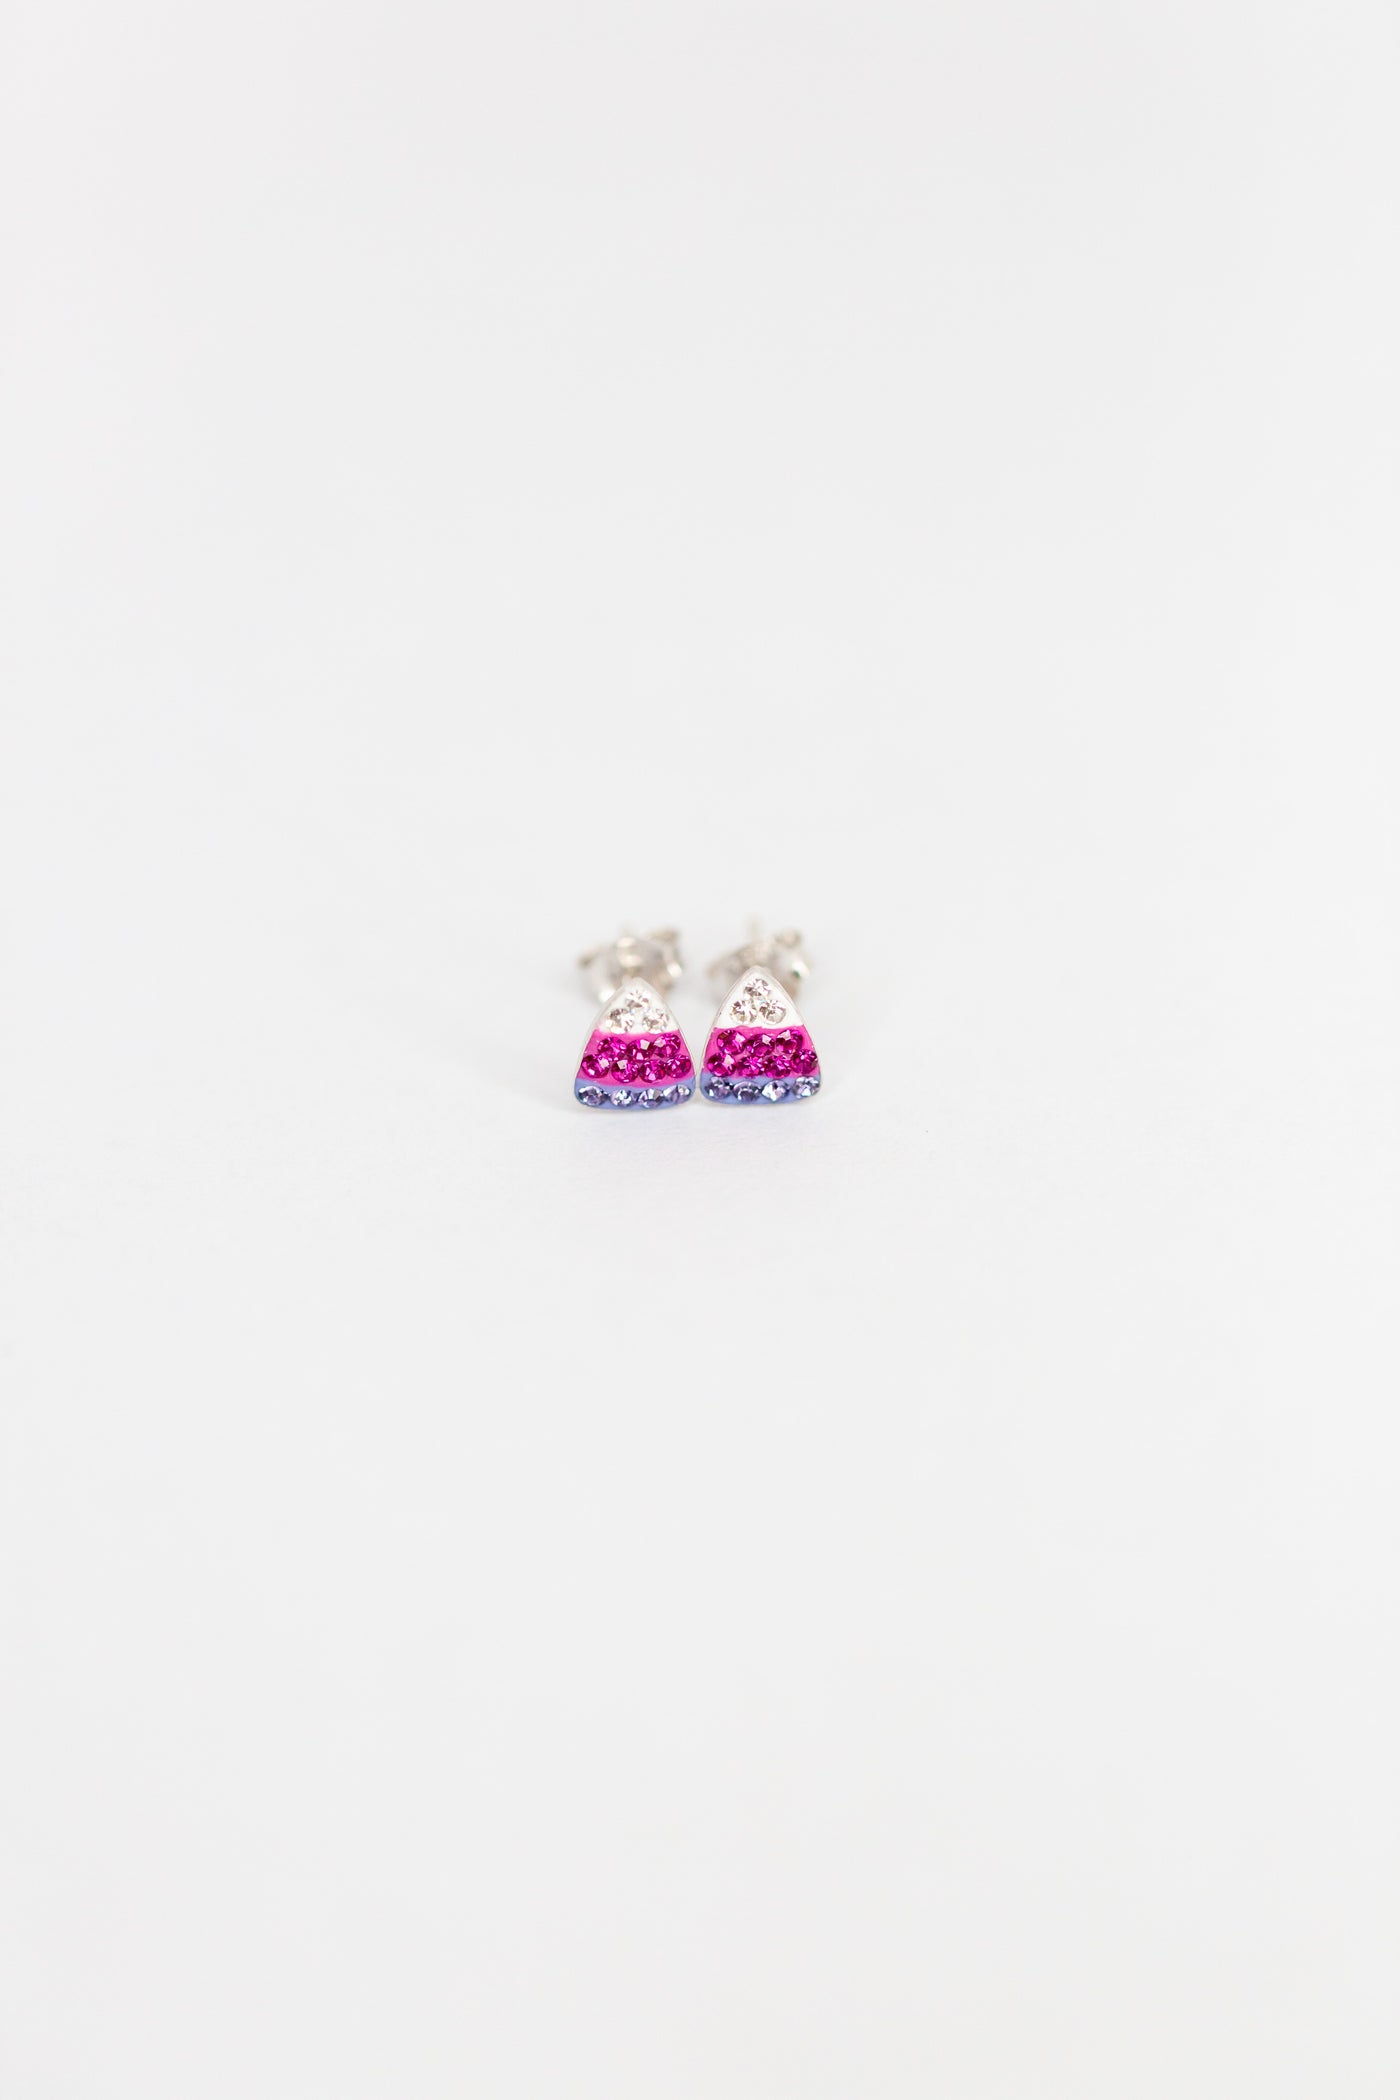 Candy Corn Crystal Silver Stud Earrings